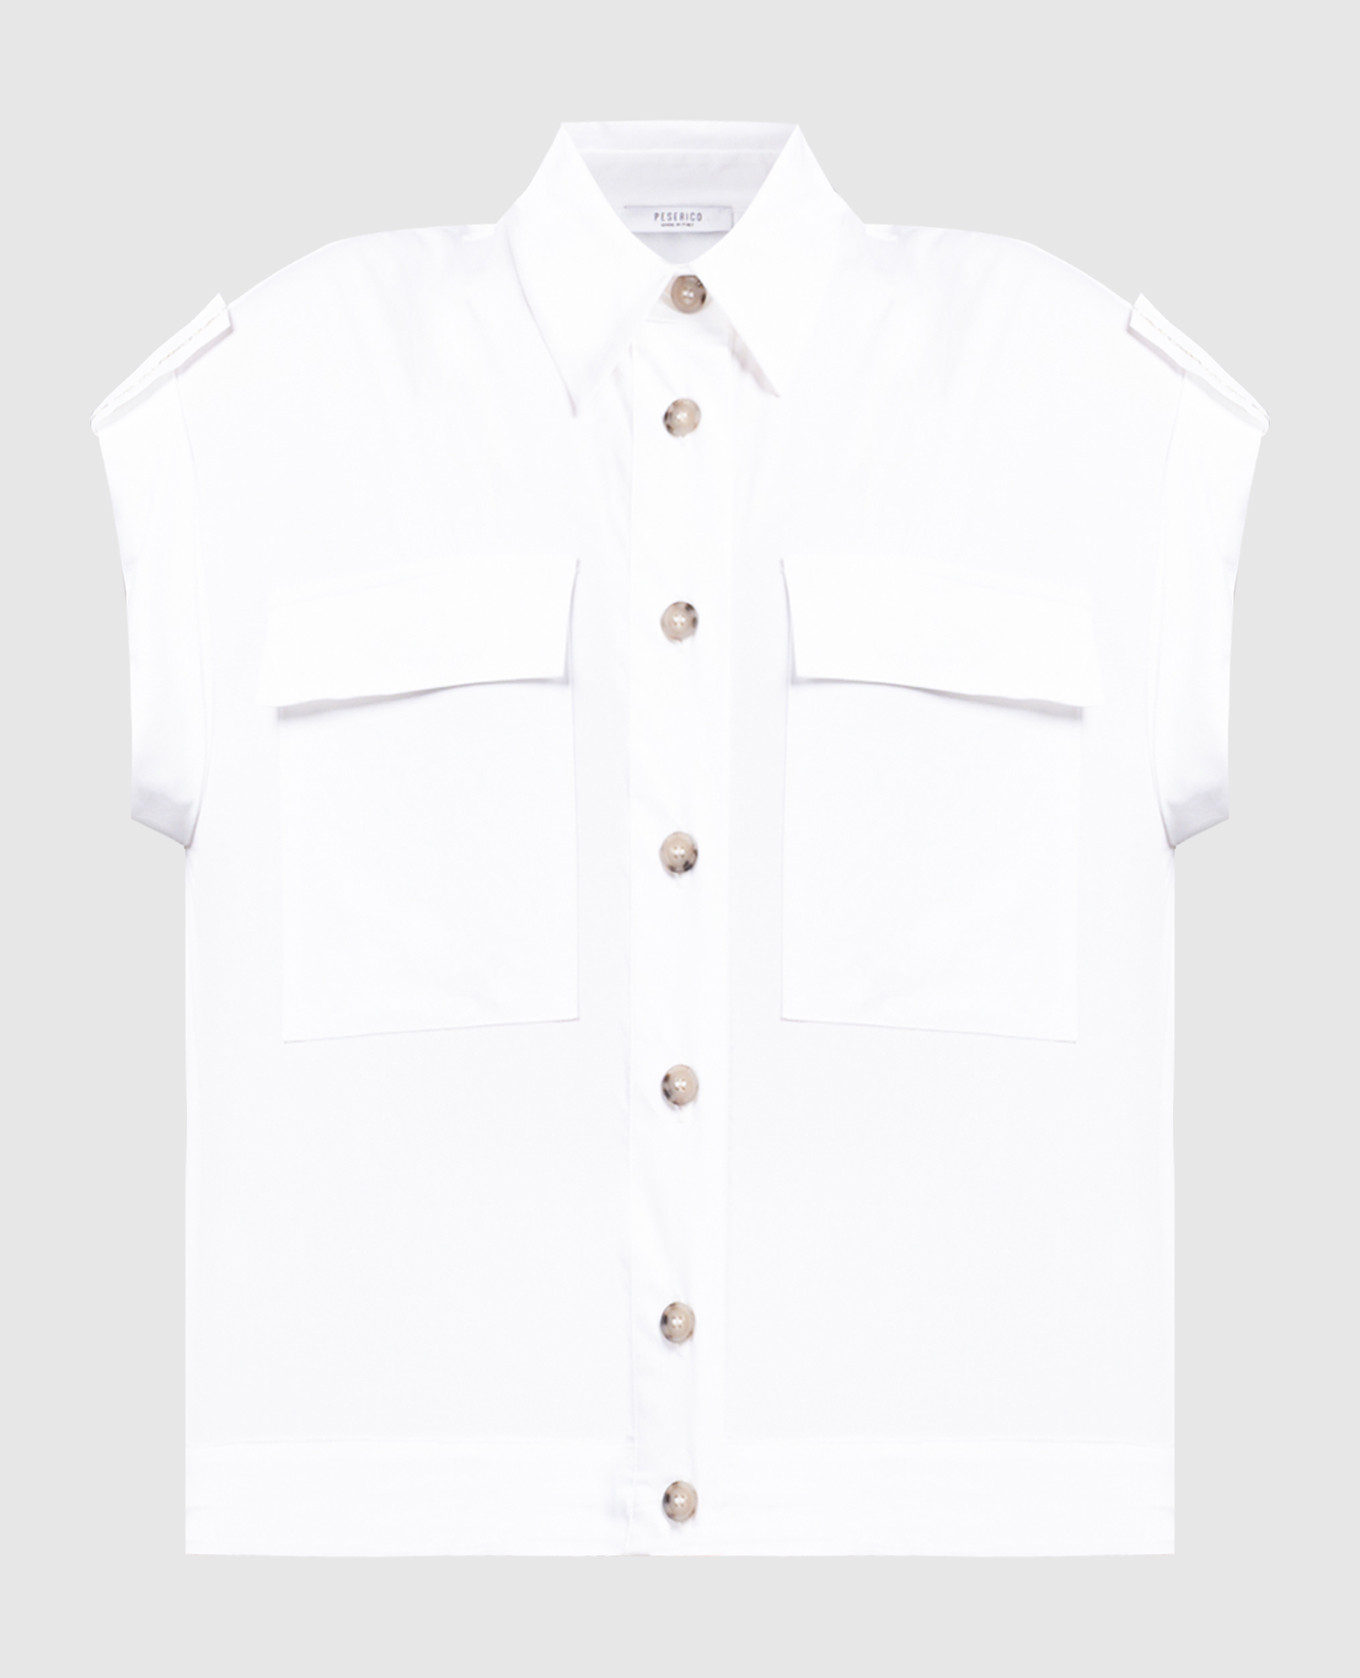 White blouse with monil chain